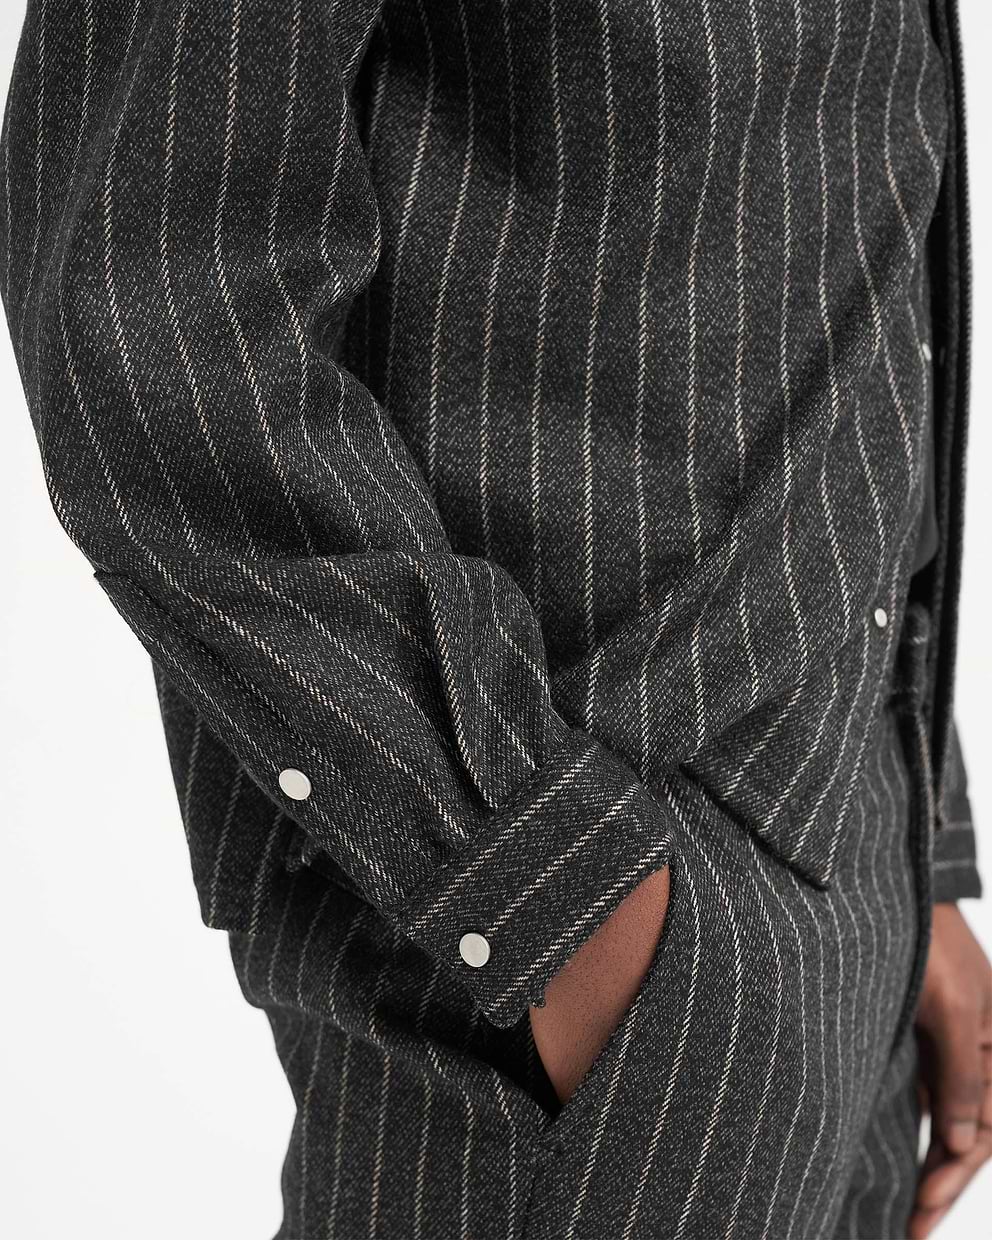 Cropped Dress Shirt - Black Pinstripe